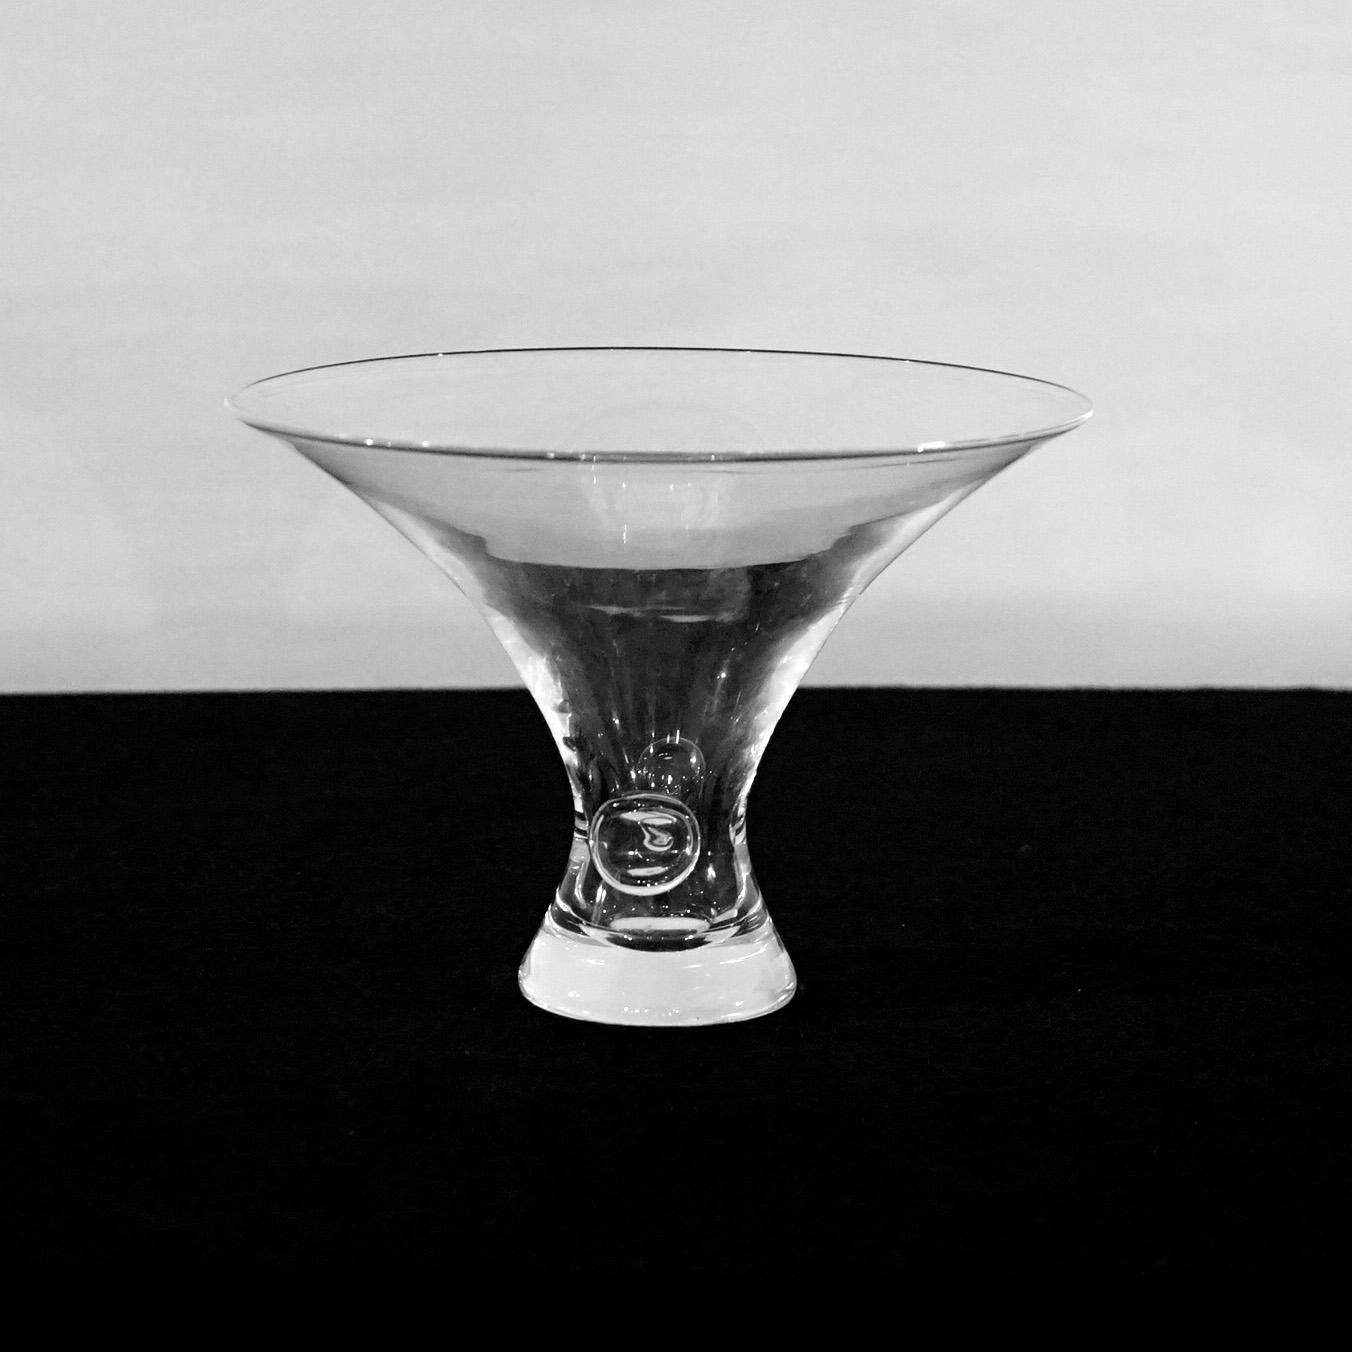 Bol en cristal évasé avec base pincée, signé Steuben Art Glass Mid Century Modern,  20e siècle

Dimensions - 9,5 